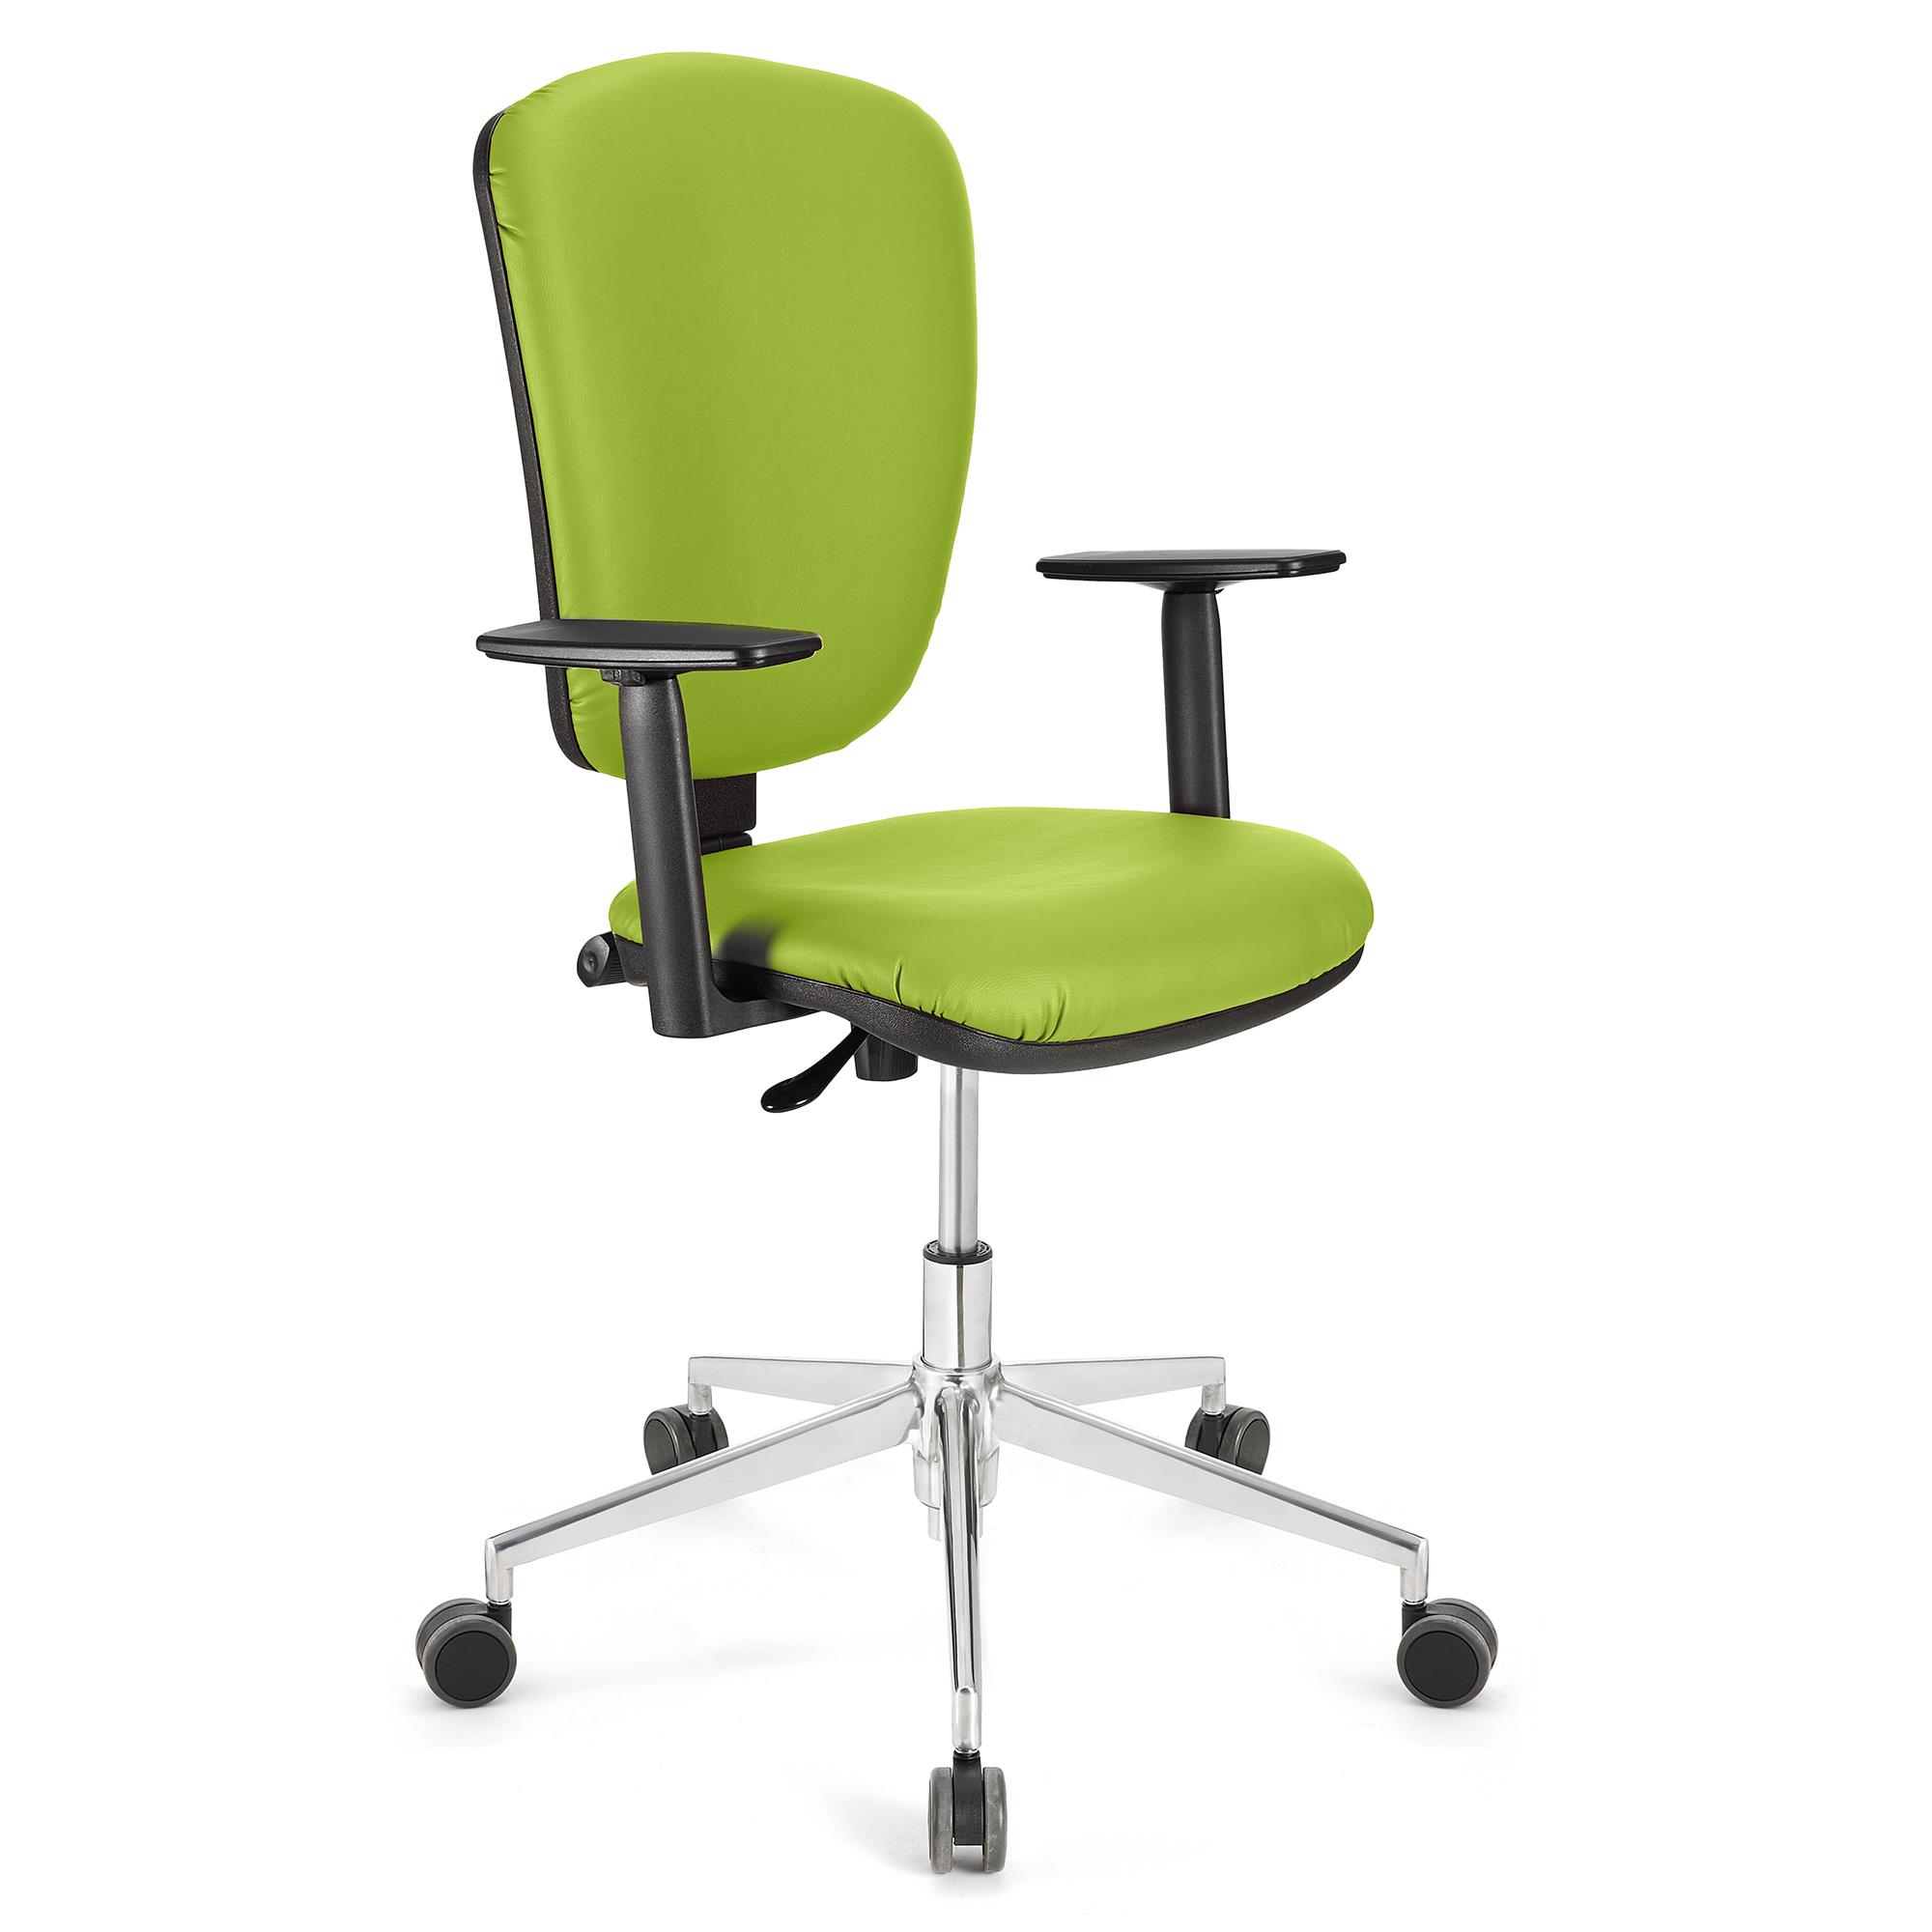 Bürostuhl KALIPSO PRO LEDER, verstellbare Rücken- und Armlehnen, Metallgestell, Lederbezug, Farbe Grün